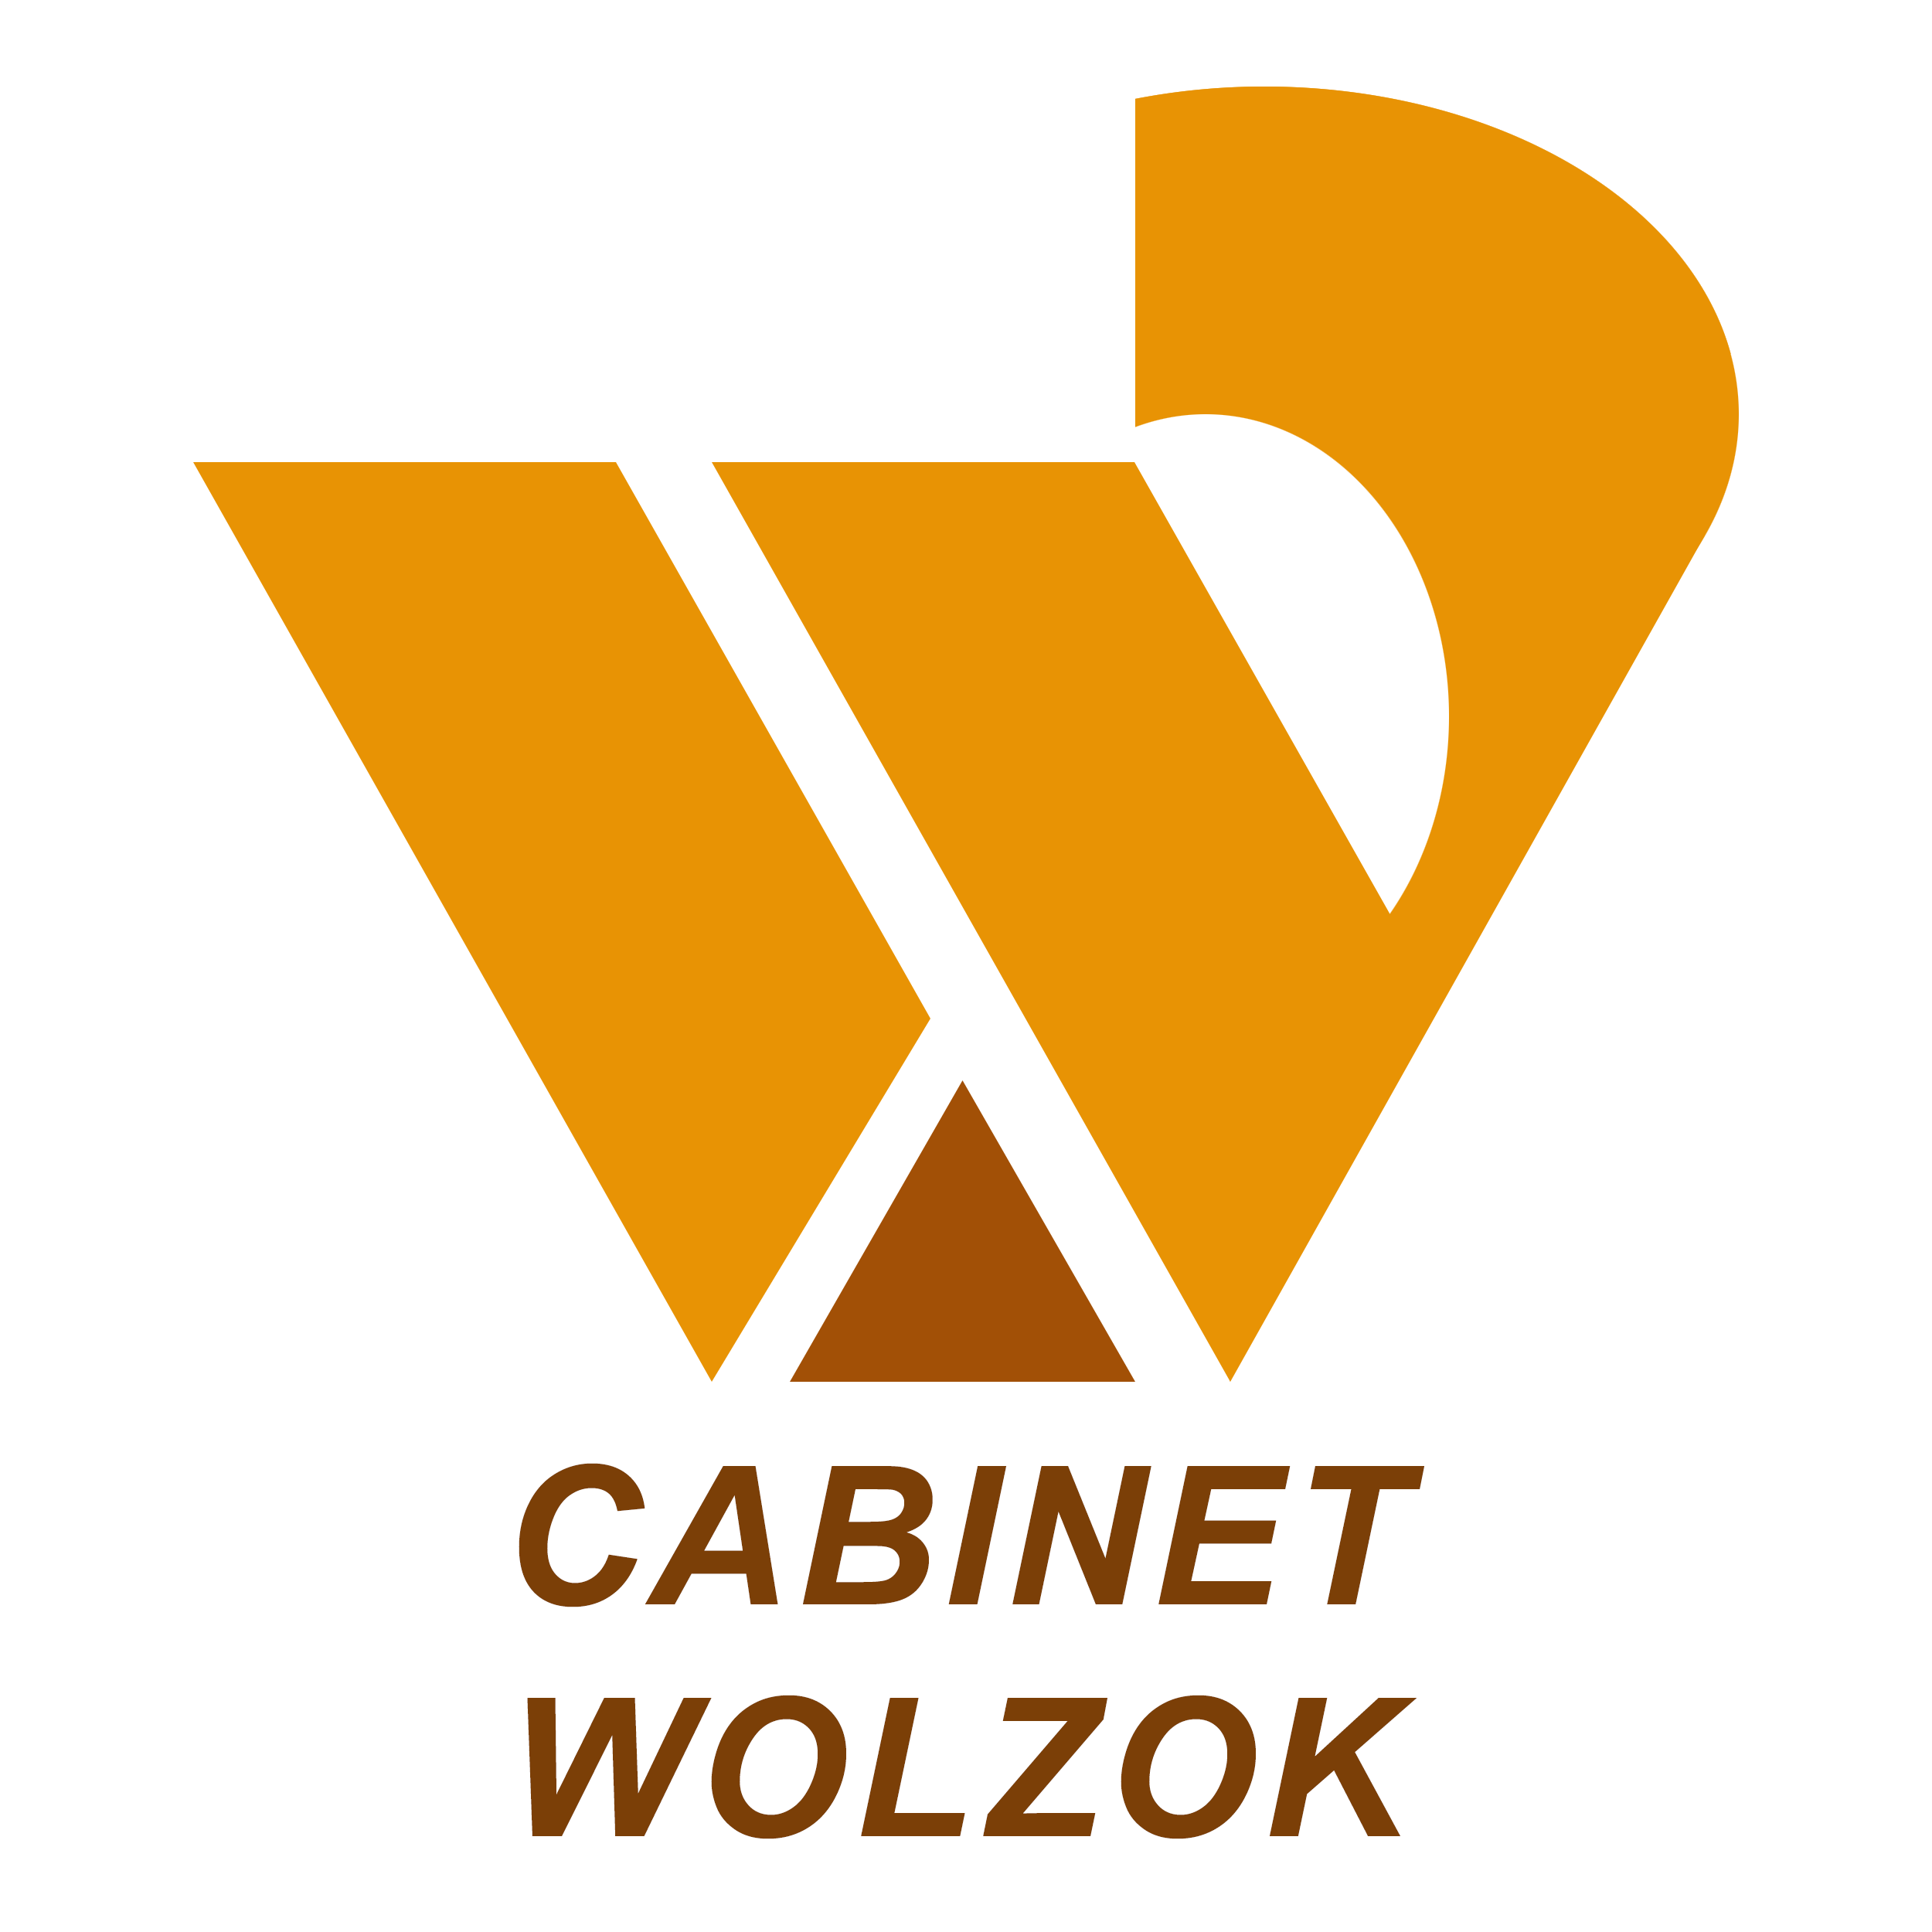 Cabinet Wolzok